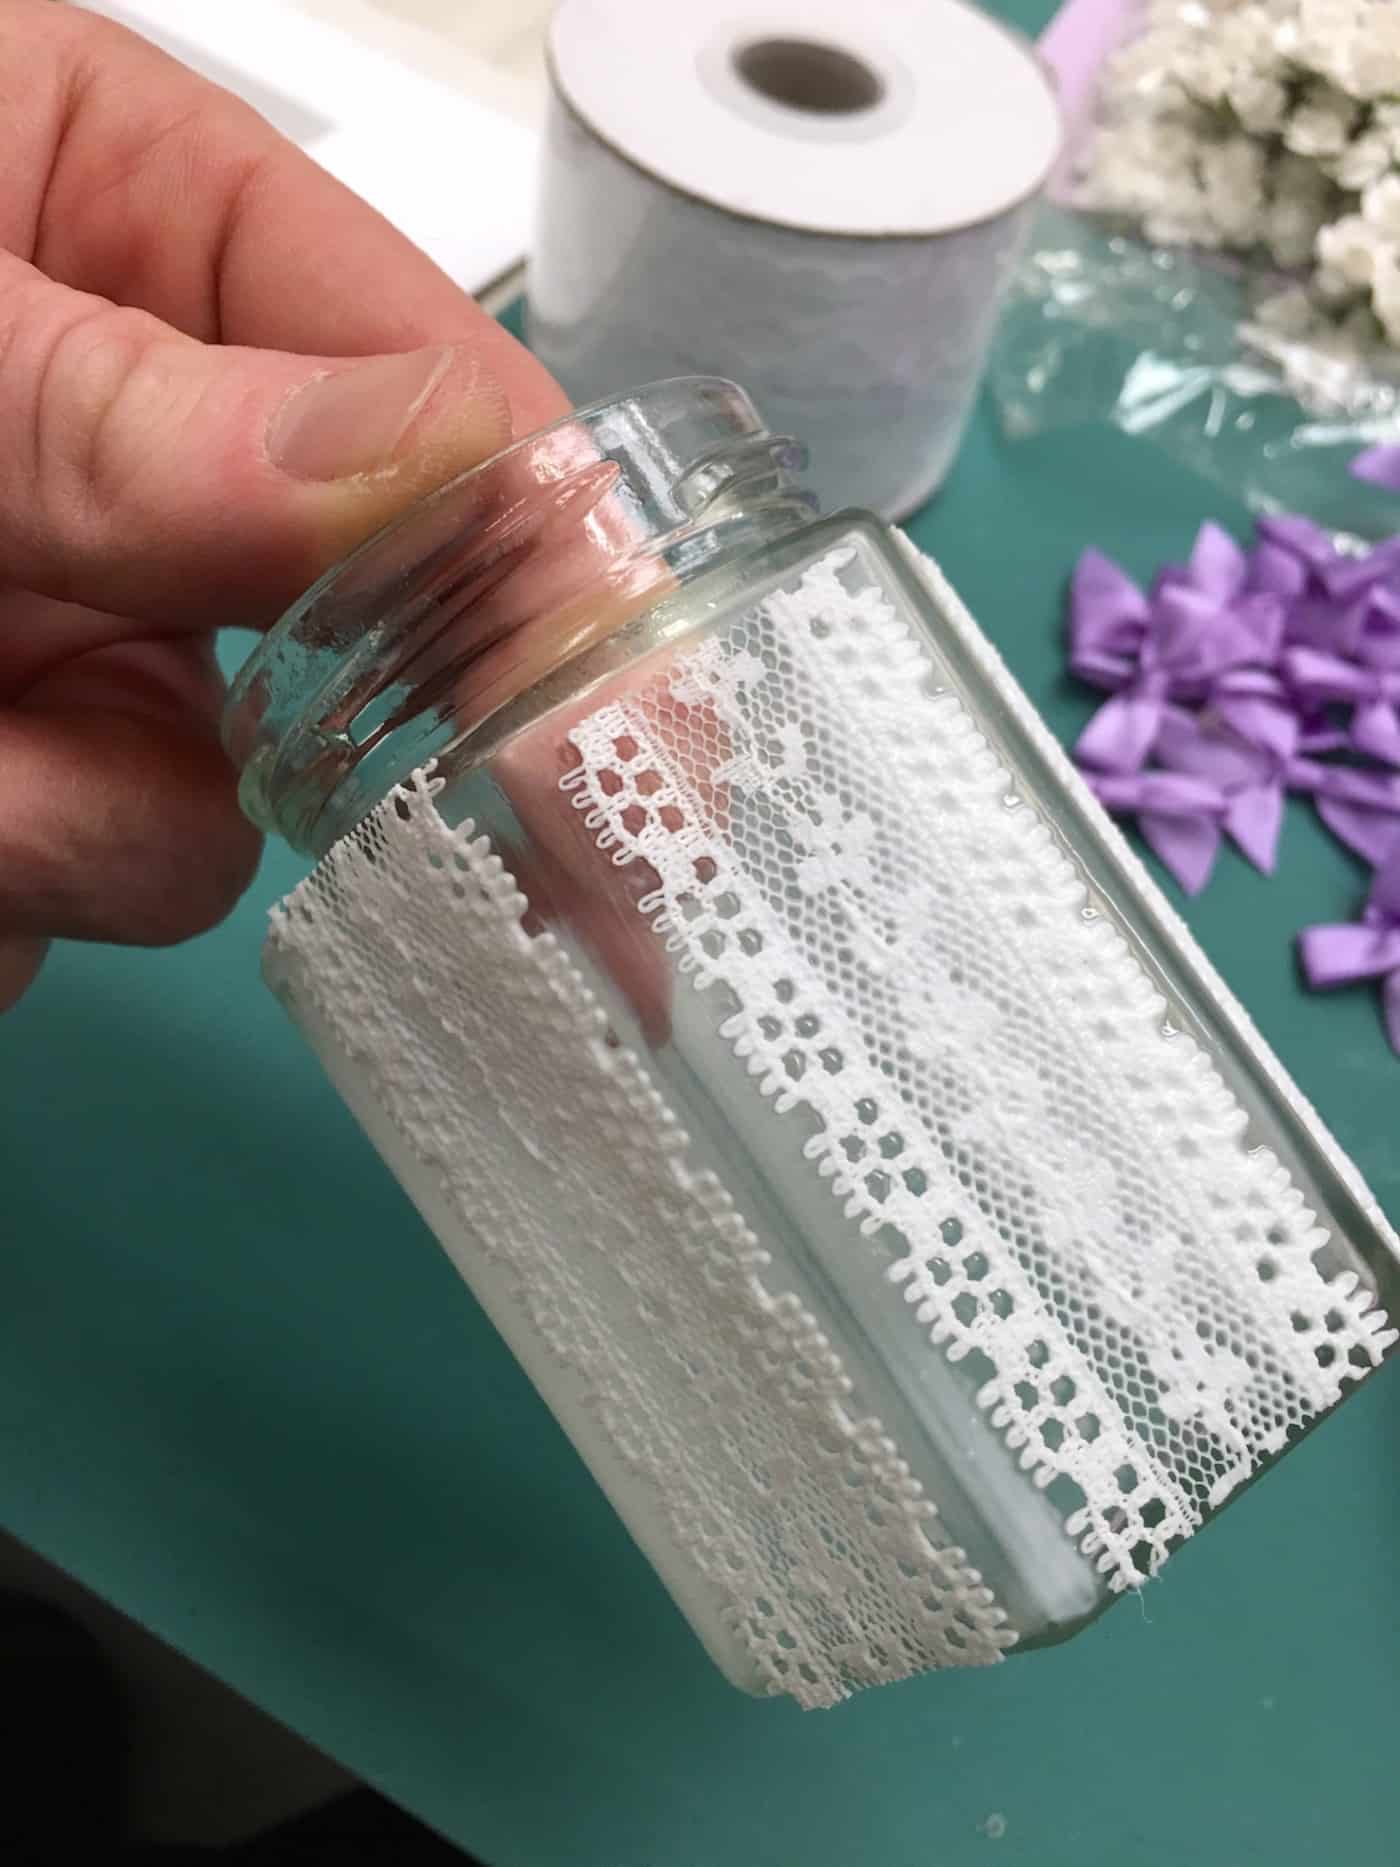 Applying lace to a mason jar